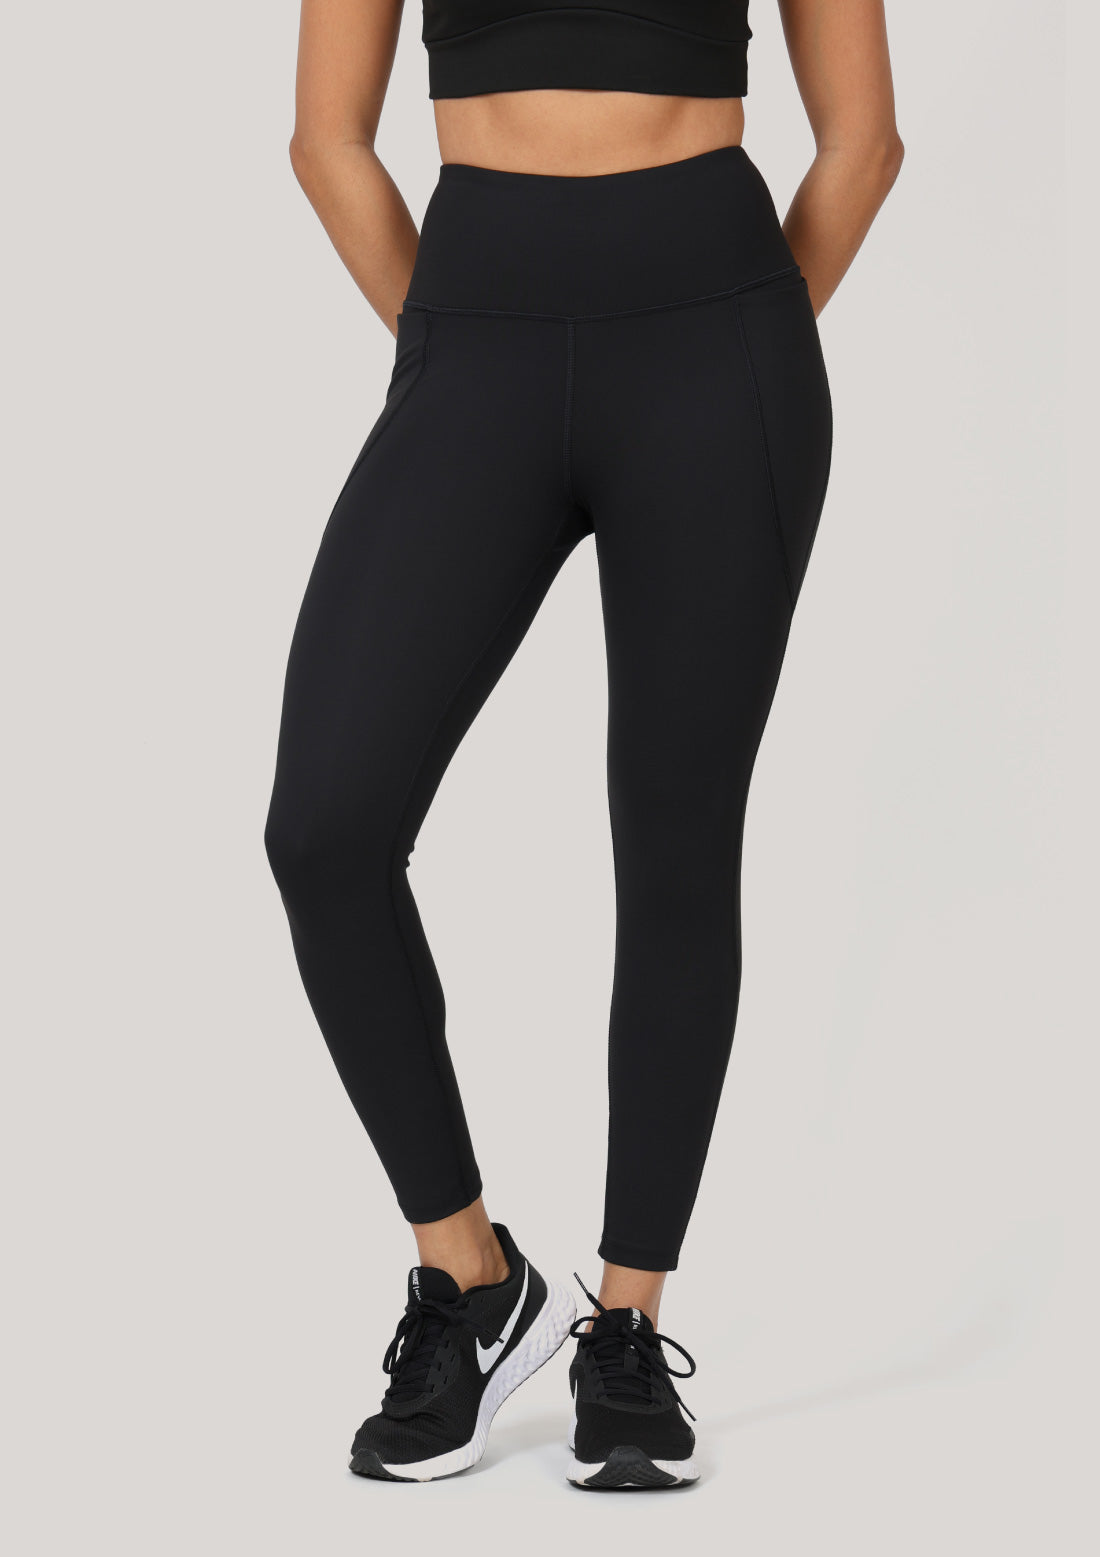 Buy Calvin Klein Women Black Side Logo Active Stretch Leggings - NNNOW.com